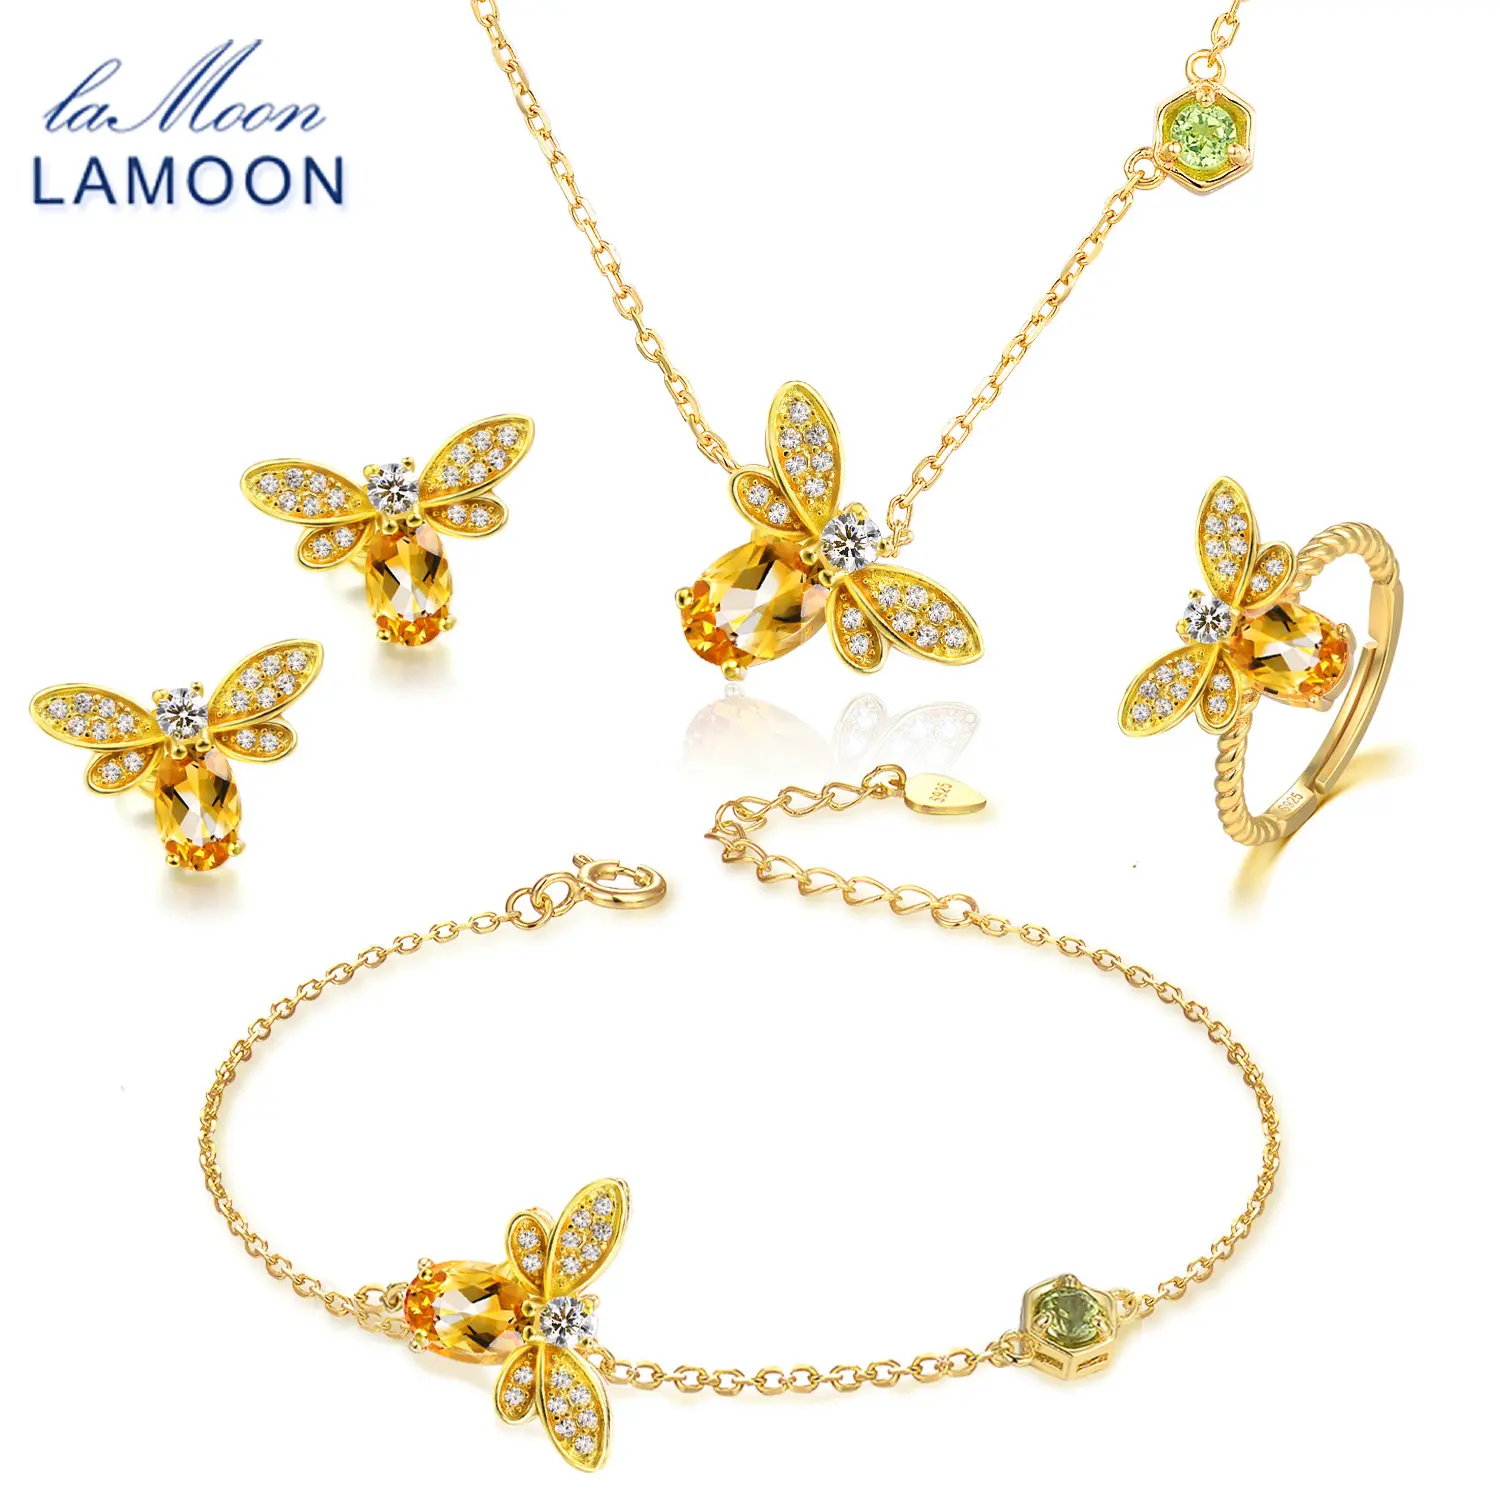 LAMOON-Conjunto de joyería de citrino Natural con piedras preciosas, joyería de plata de ley 925 con abeja encantadora, pendientes, anillo, collar, pulsera, V027-5